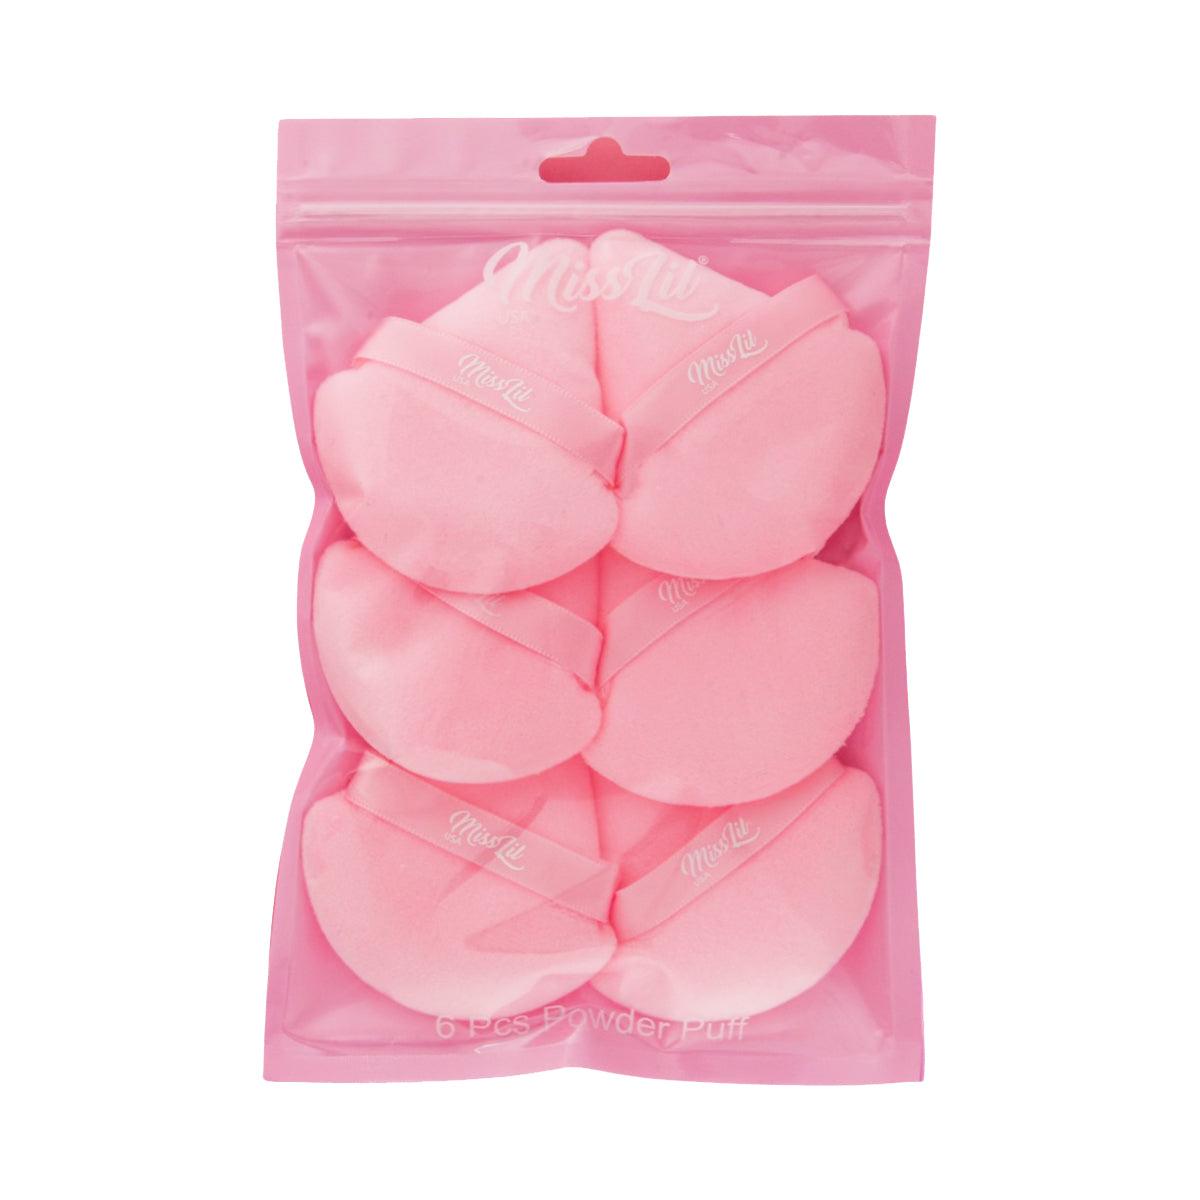 Powder puff pink - Miss Lil USA Wholesale